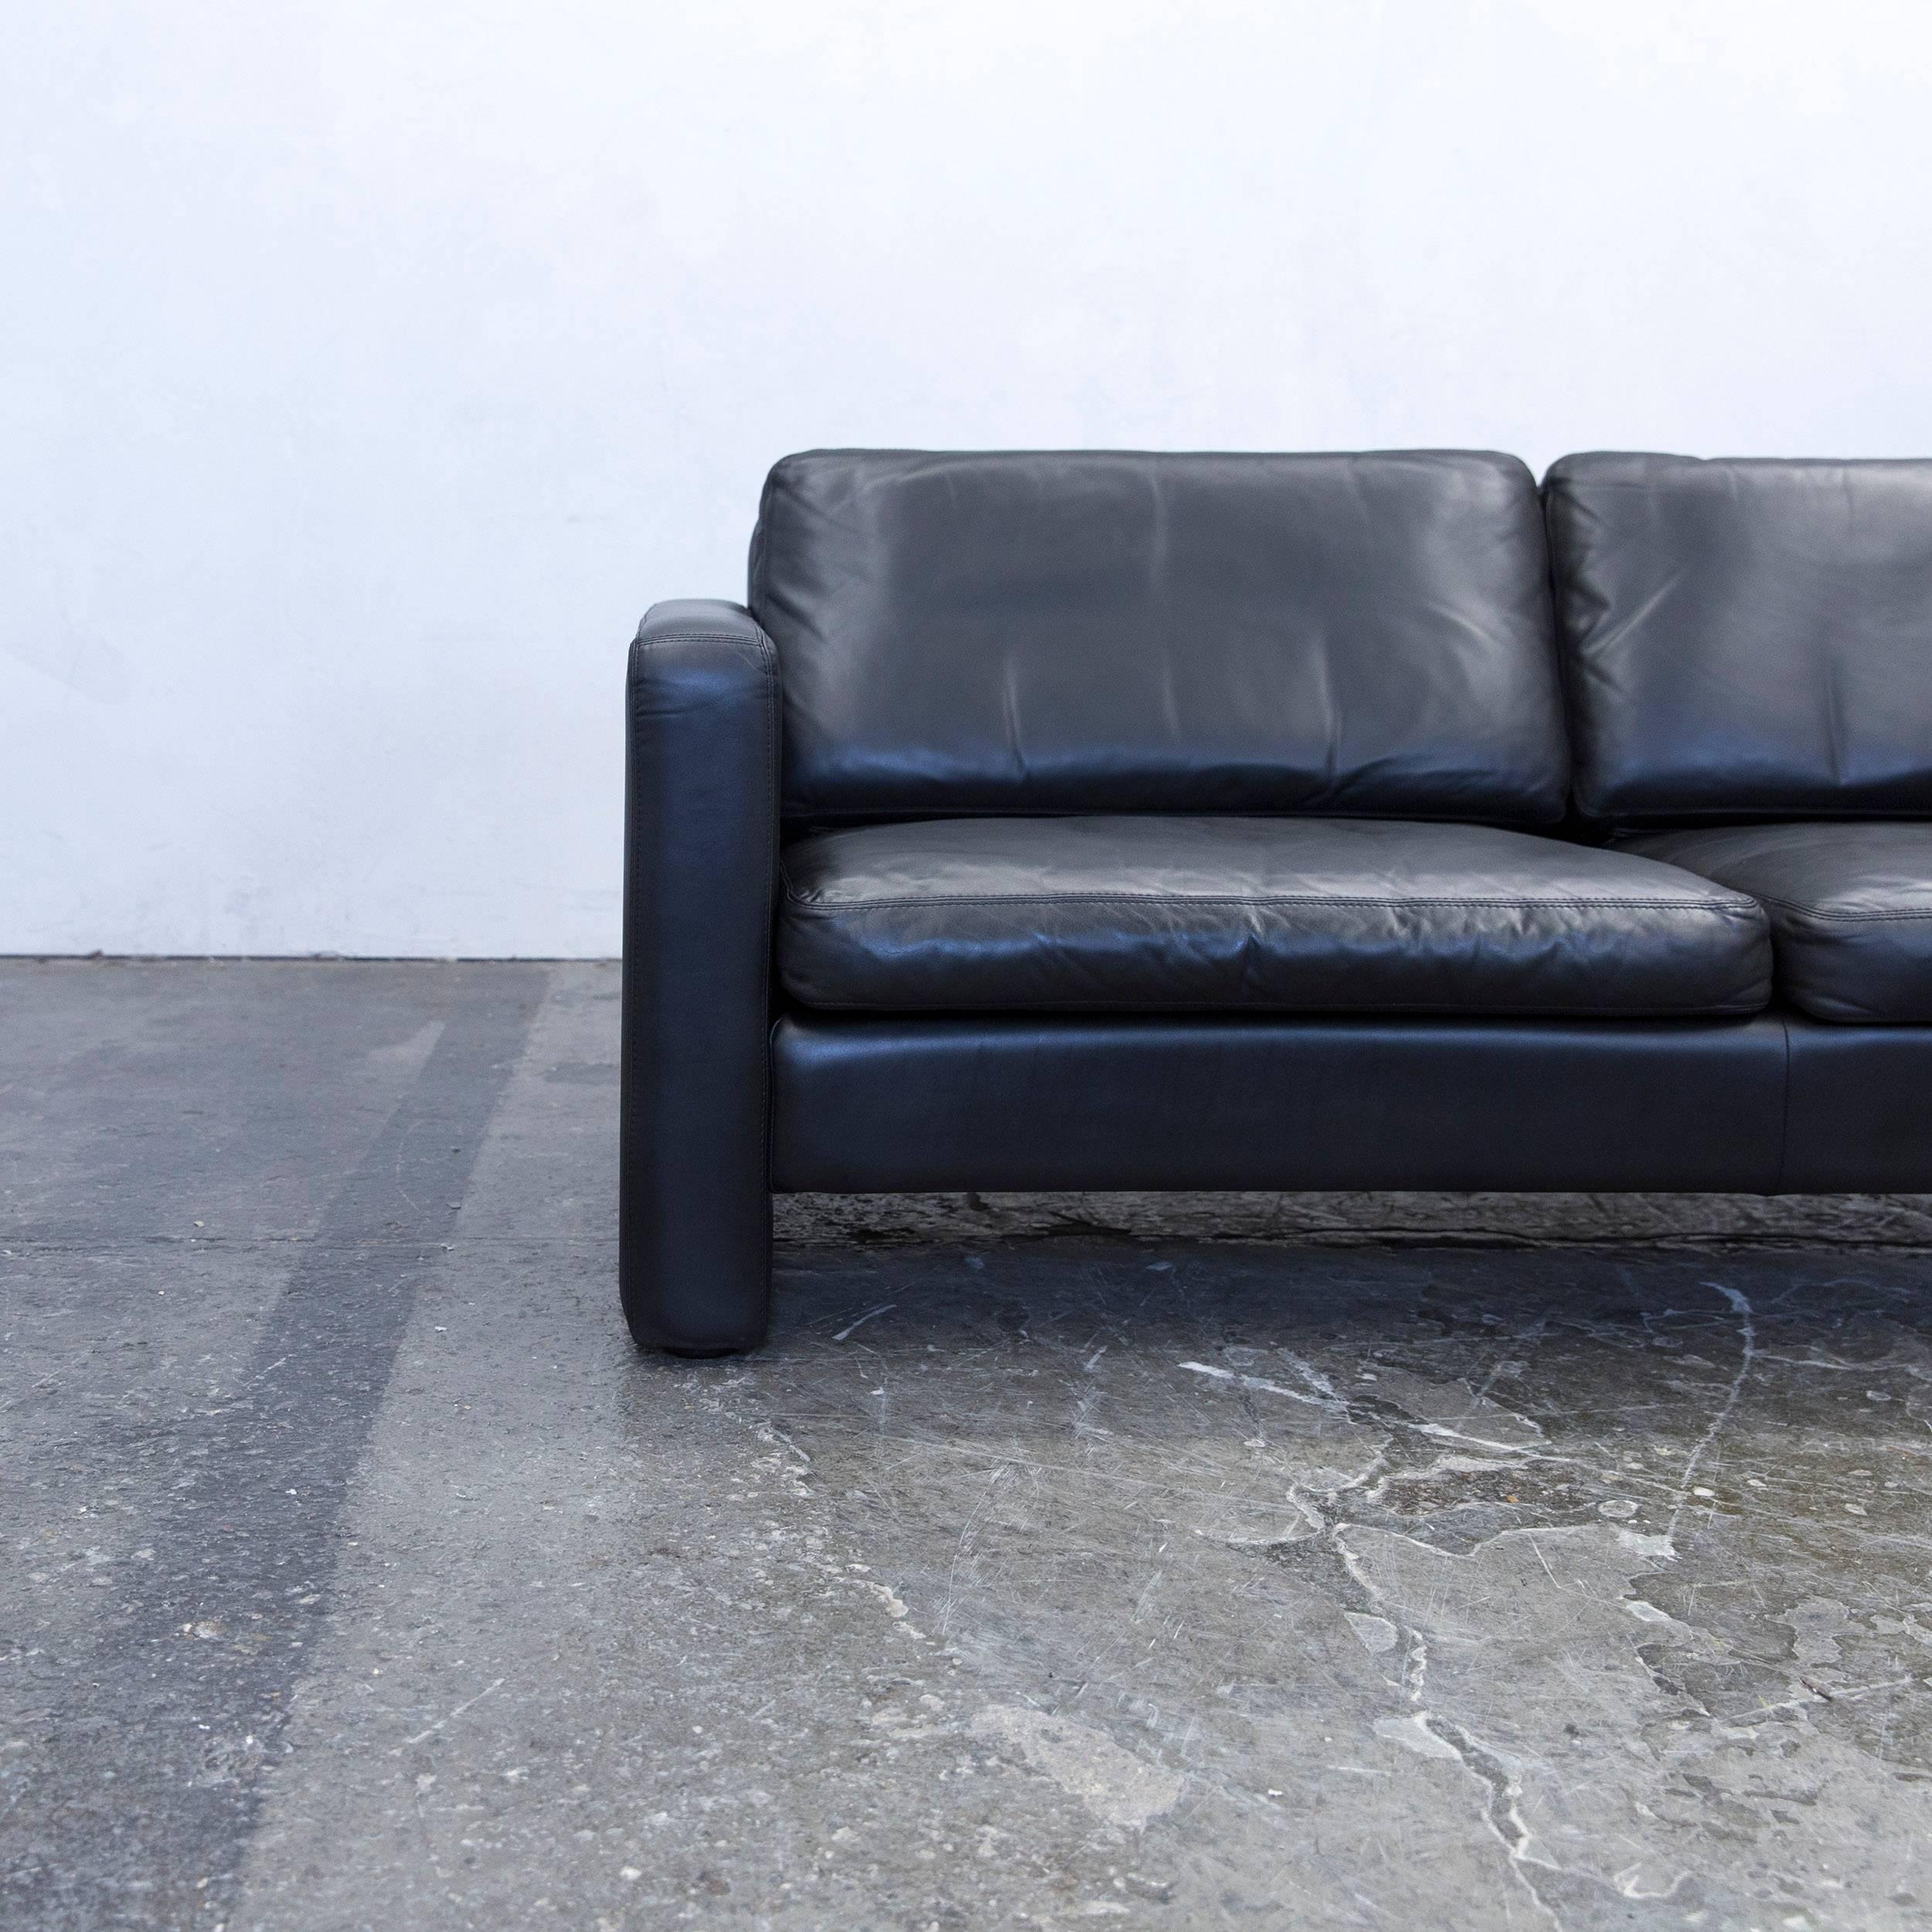 Black colored original COR designer leather sofa, in a minimalistic and modern design, made for pure comfort.